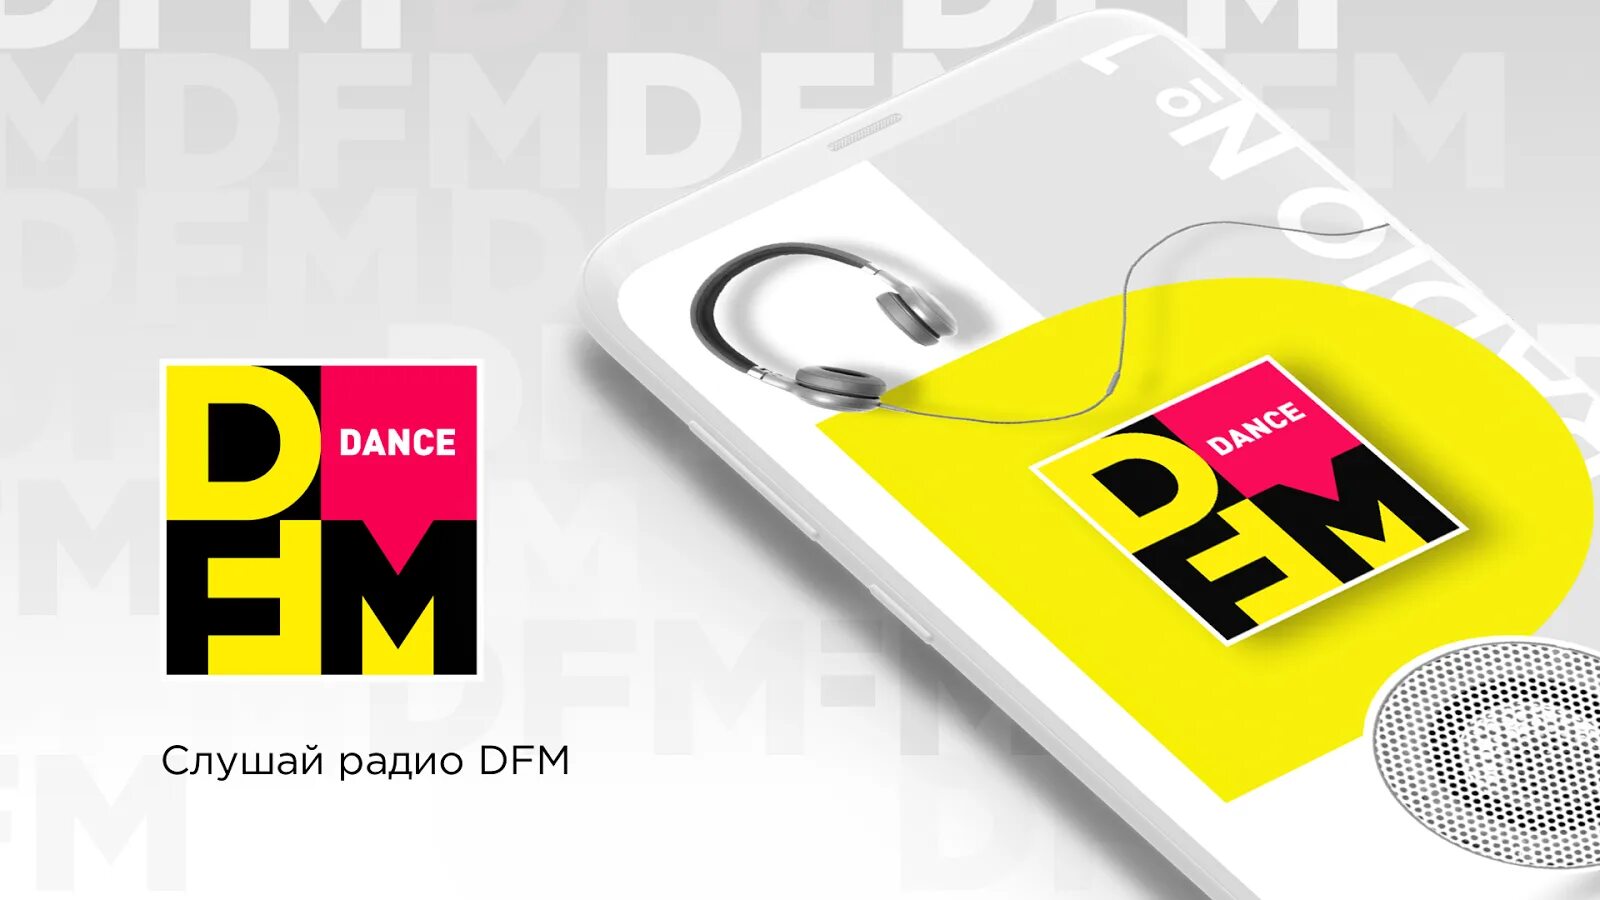 DFM. DFM радио. Сайт радиостанции DFM. Логотип ди ФМ. Радио фм воркута